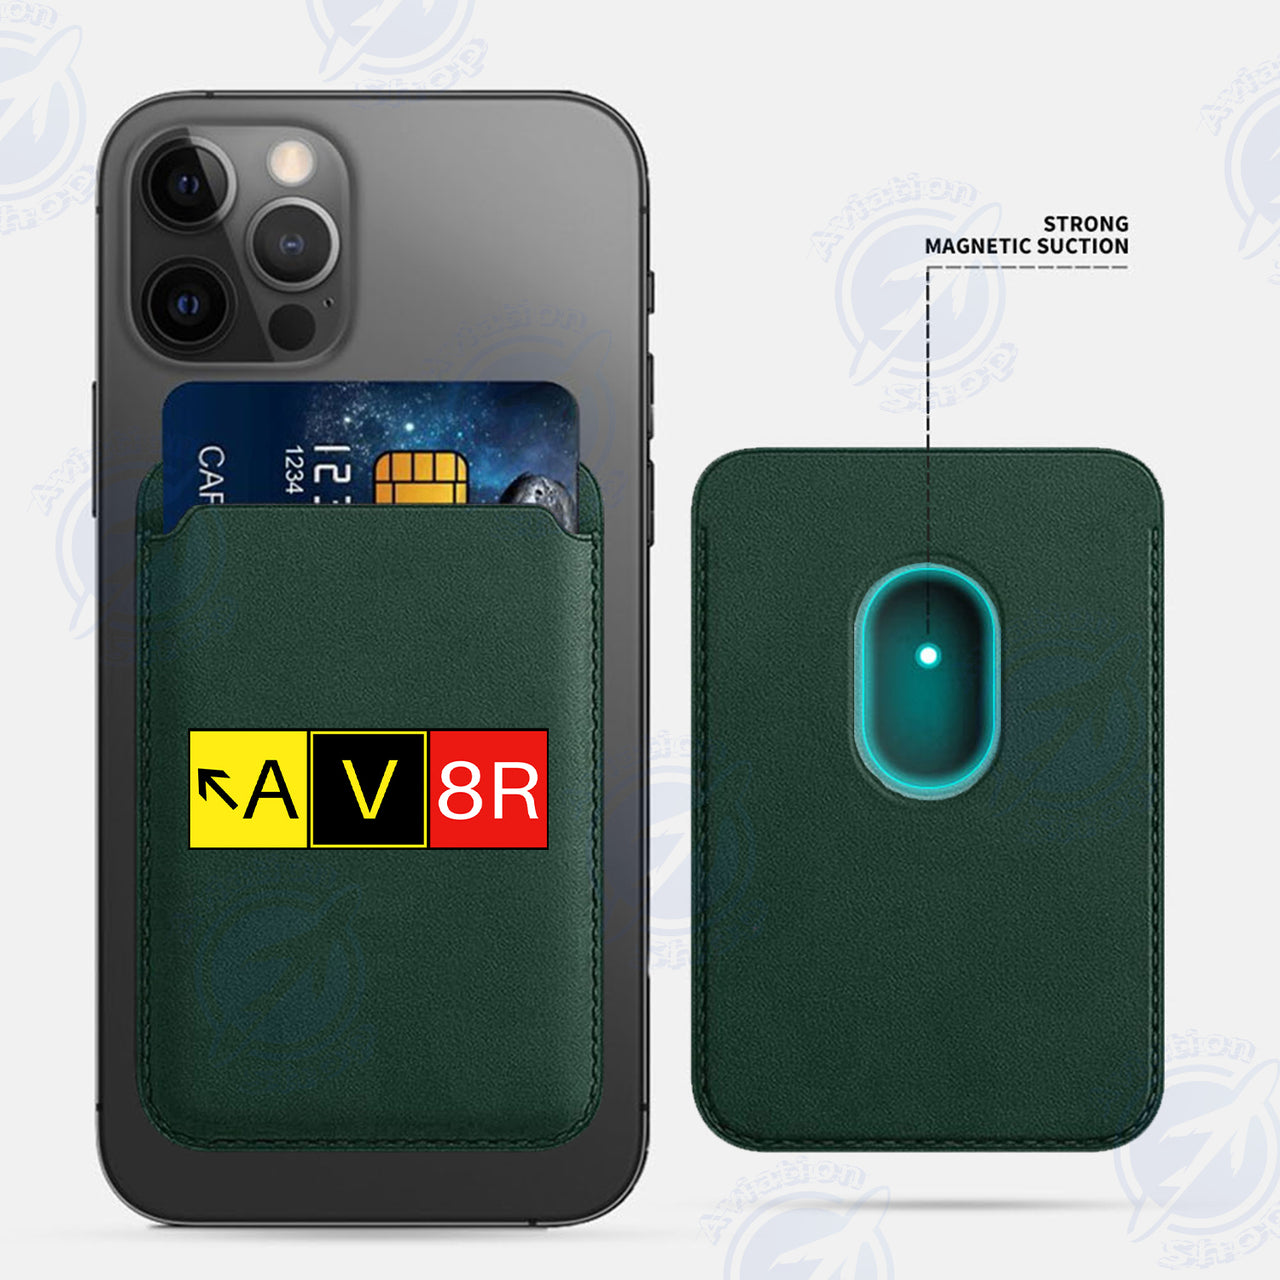 AV8R iPhone Cases Magnetic Card Wallet